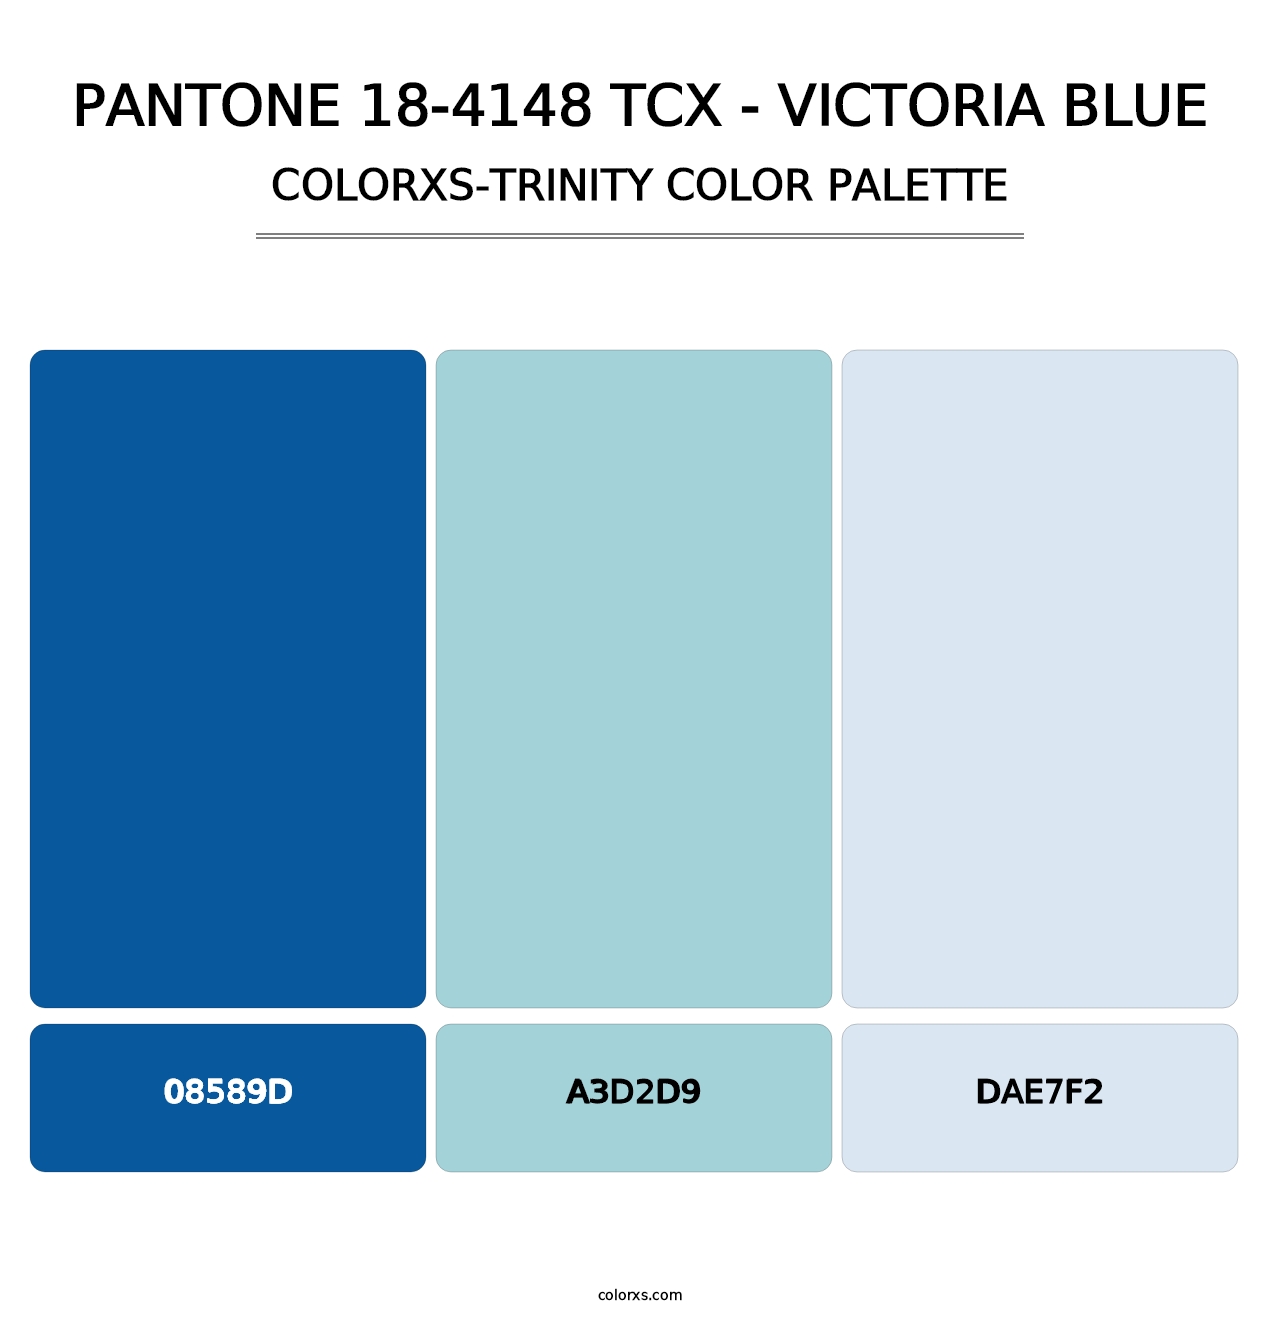 PANTONE 18-4148 TCX - Victoria Blue - Colorxs Trinity Palette